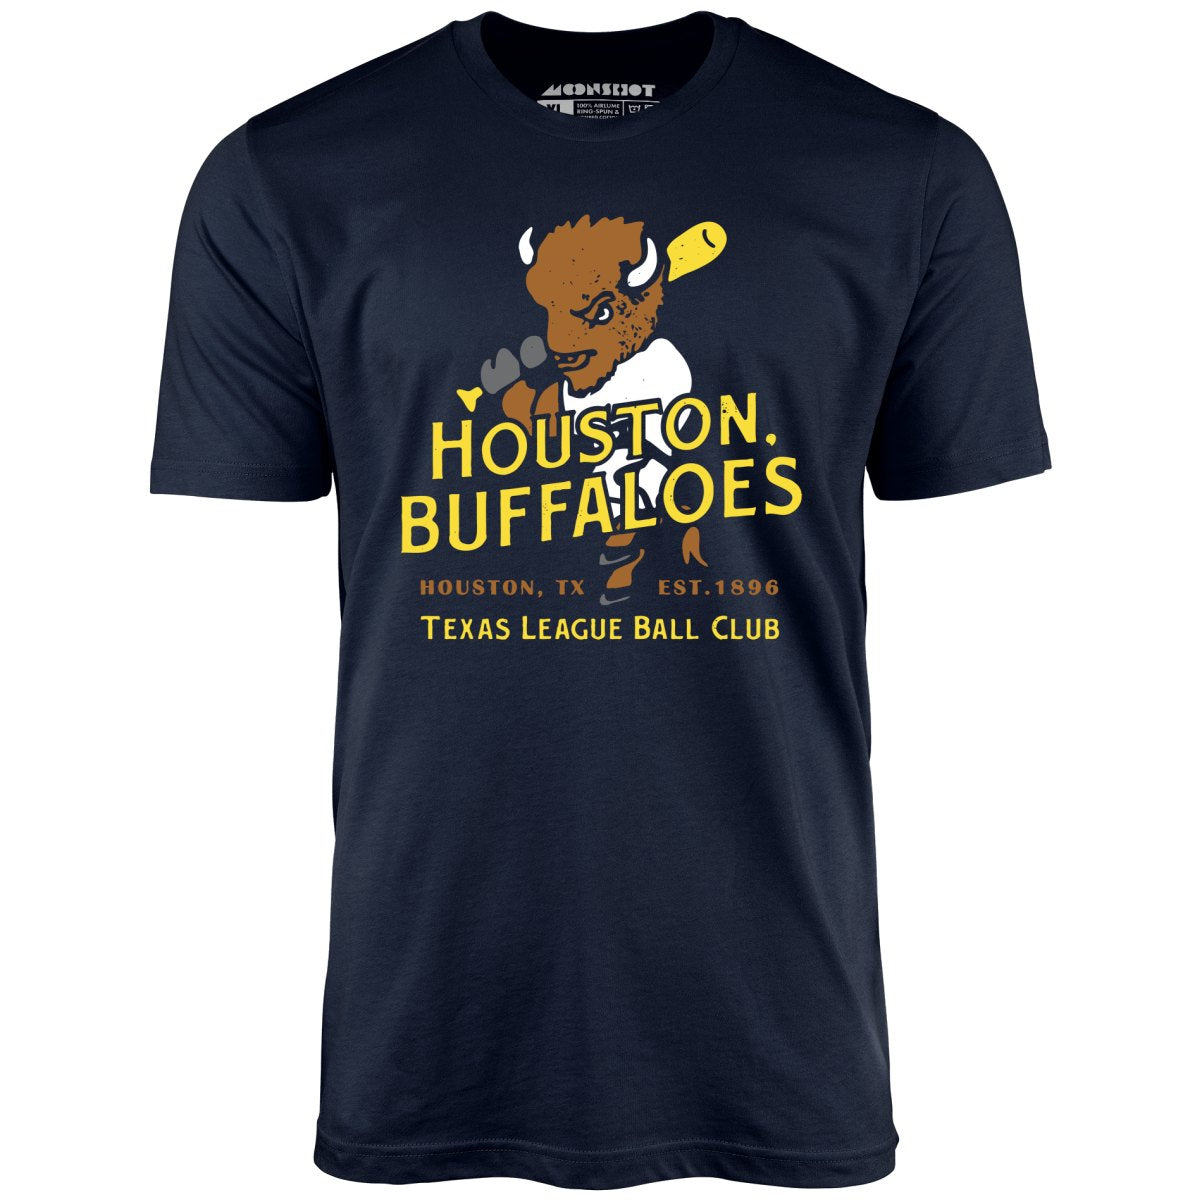 Defunct - Houston Colt 45s Baseball Kids T-Shirt for Sale by EwaldWunsch